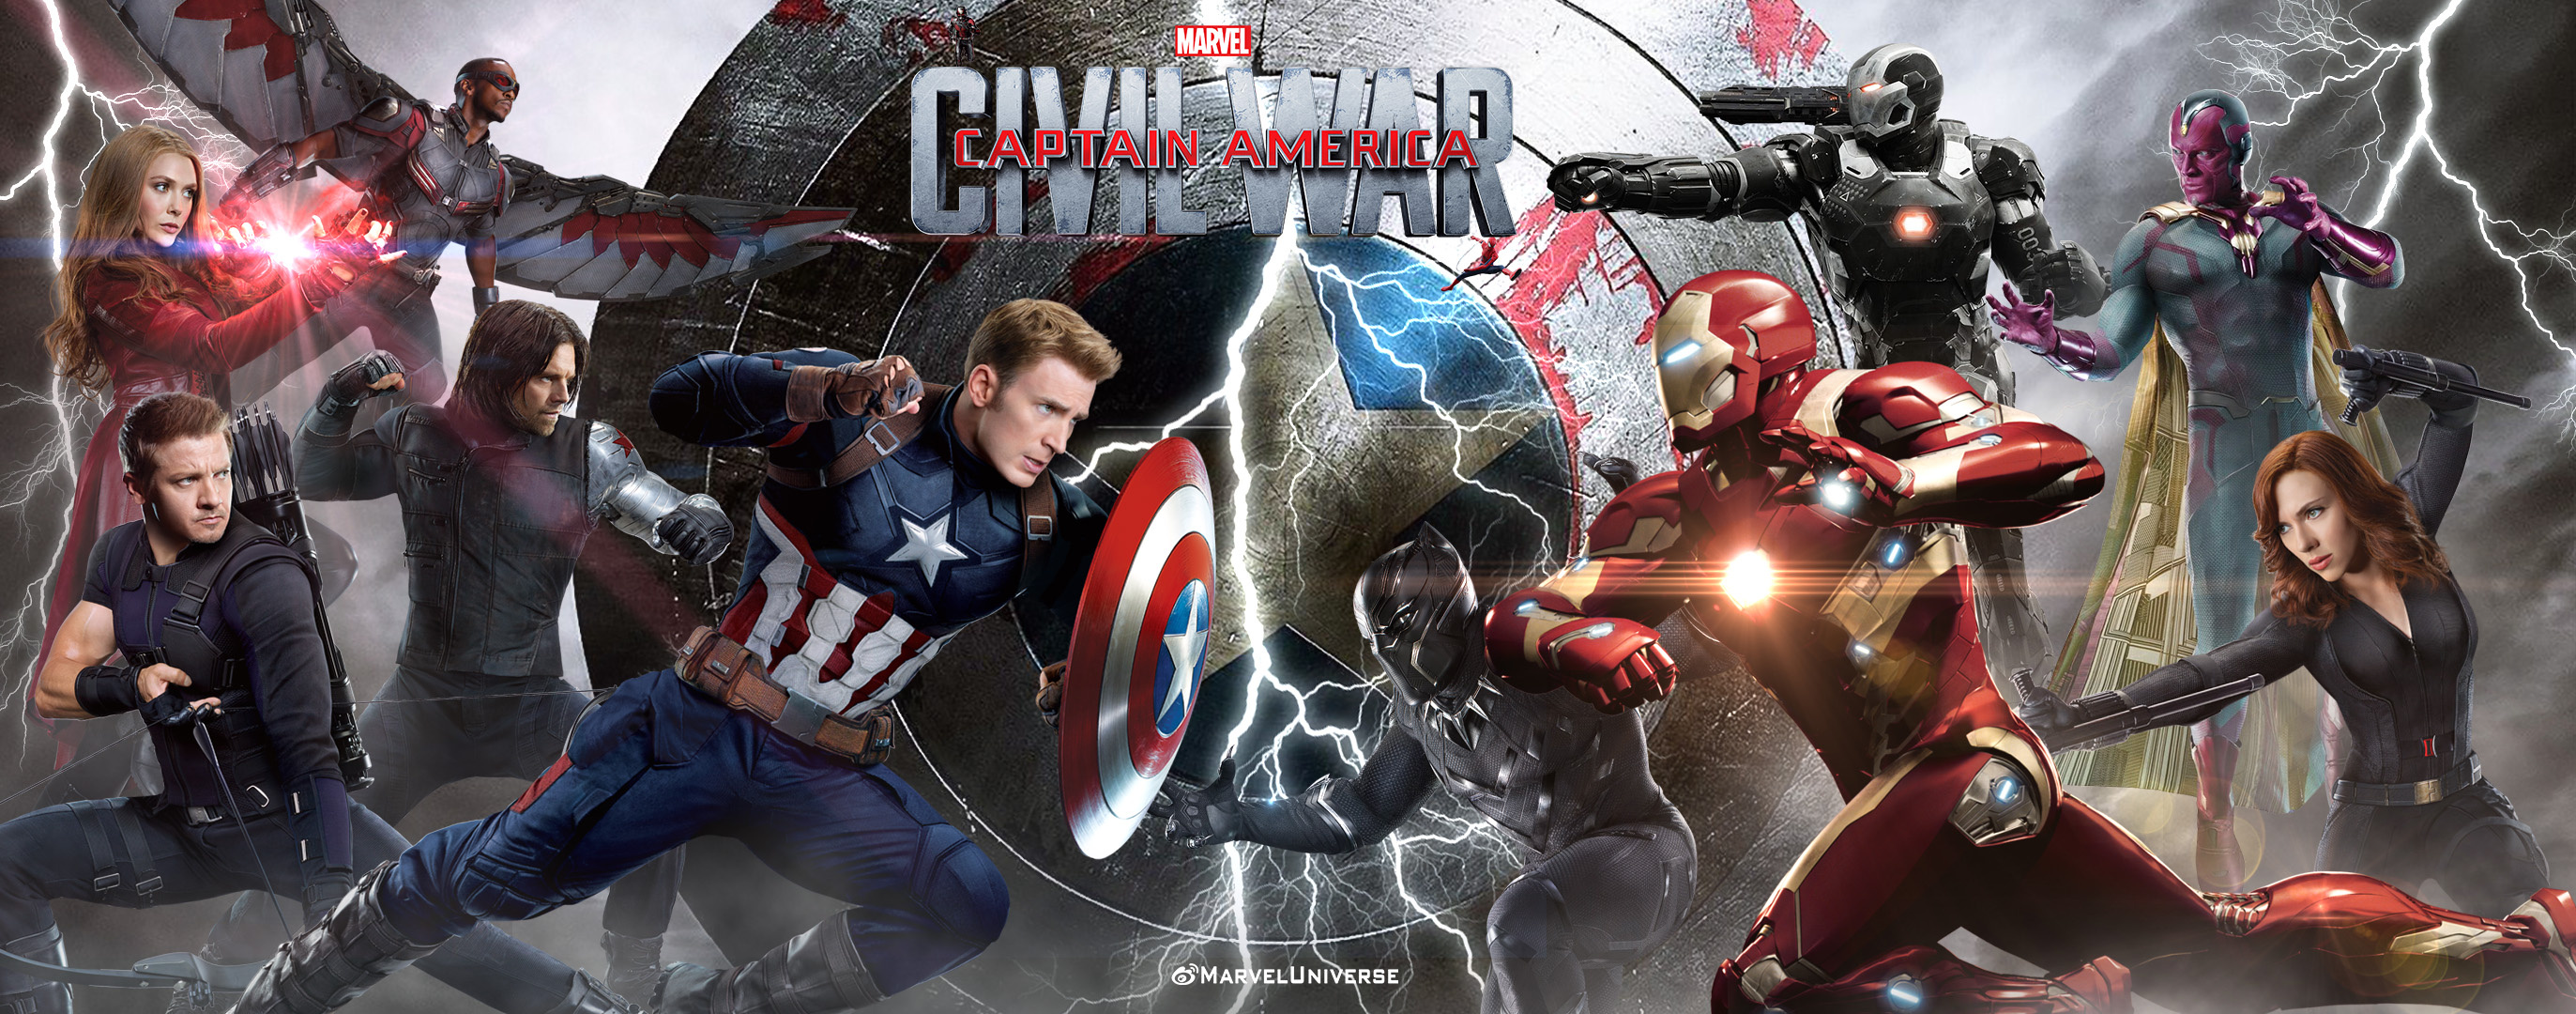 Captain America, Civil War battles, Action-packed movie, Superhero showdown, 2750x1080 Dual Screen Desktop